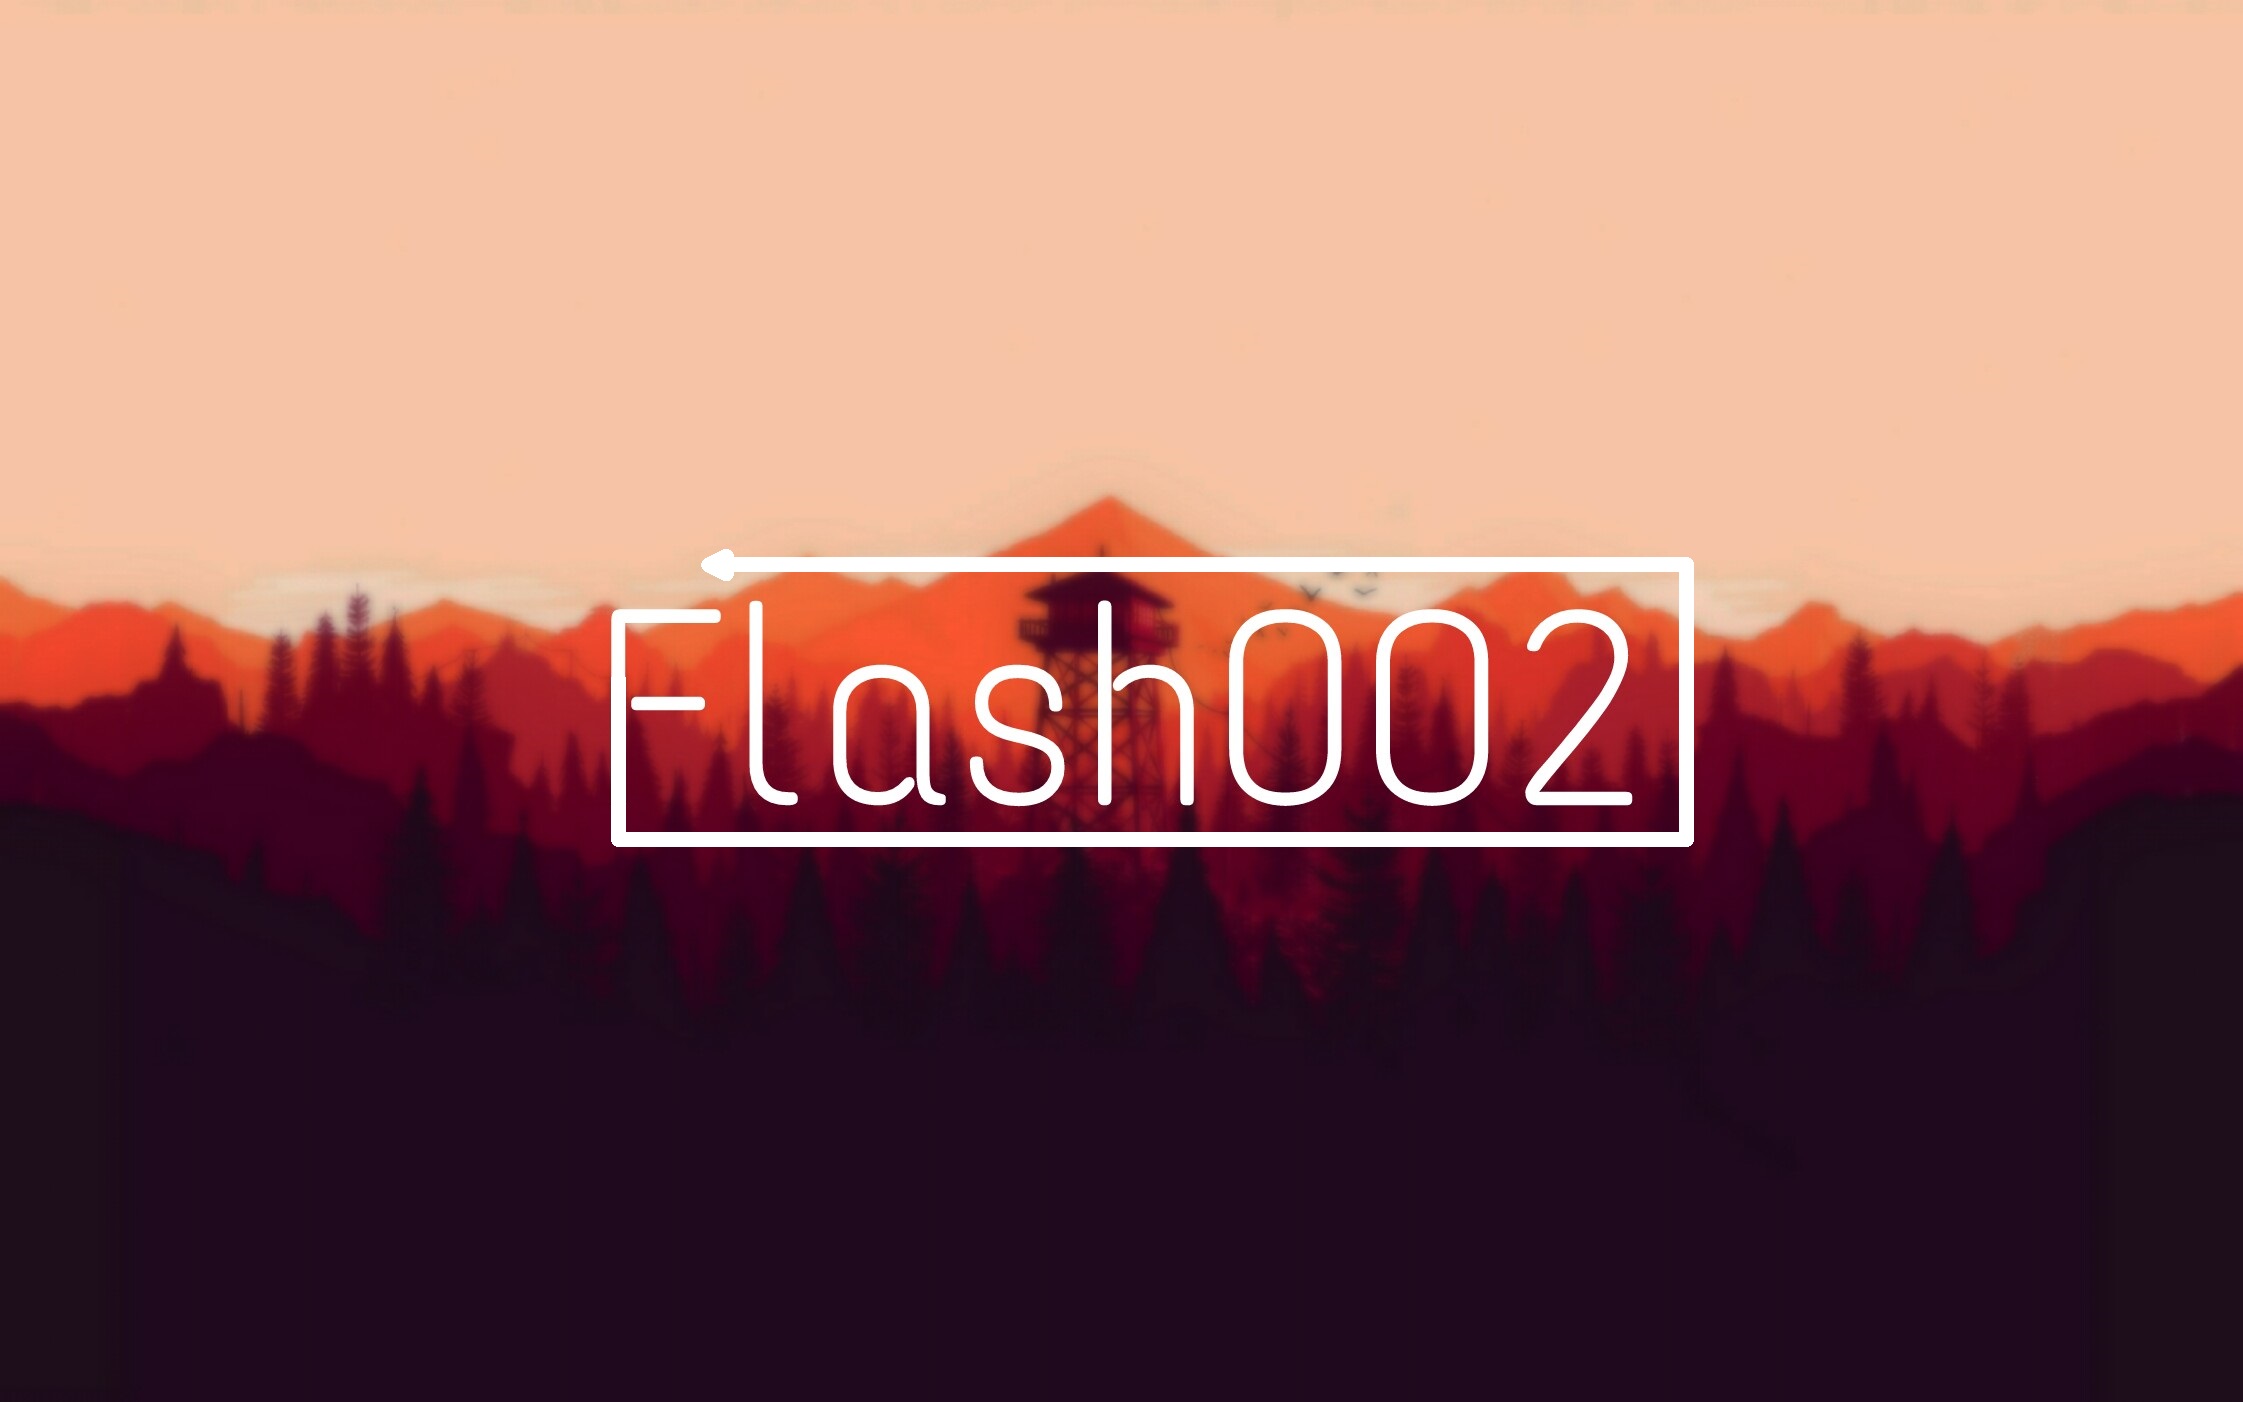 Flash002